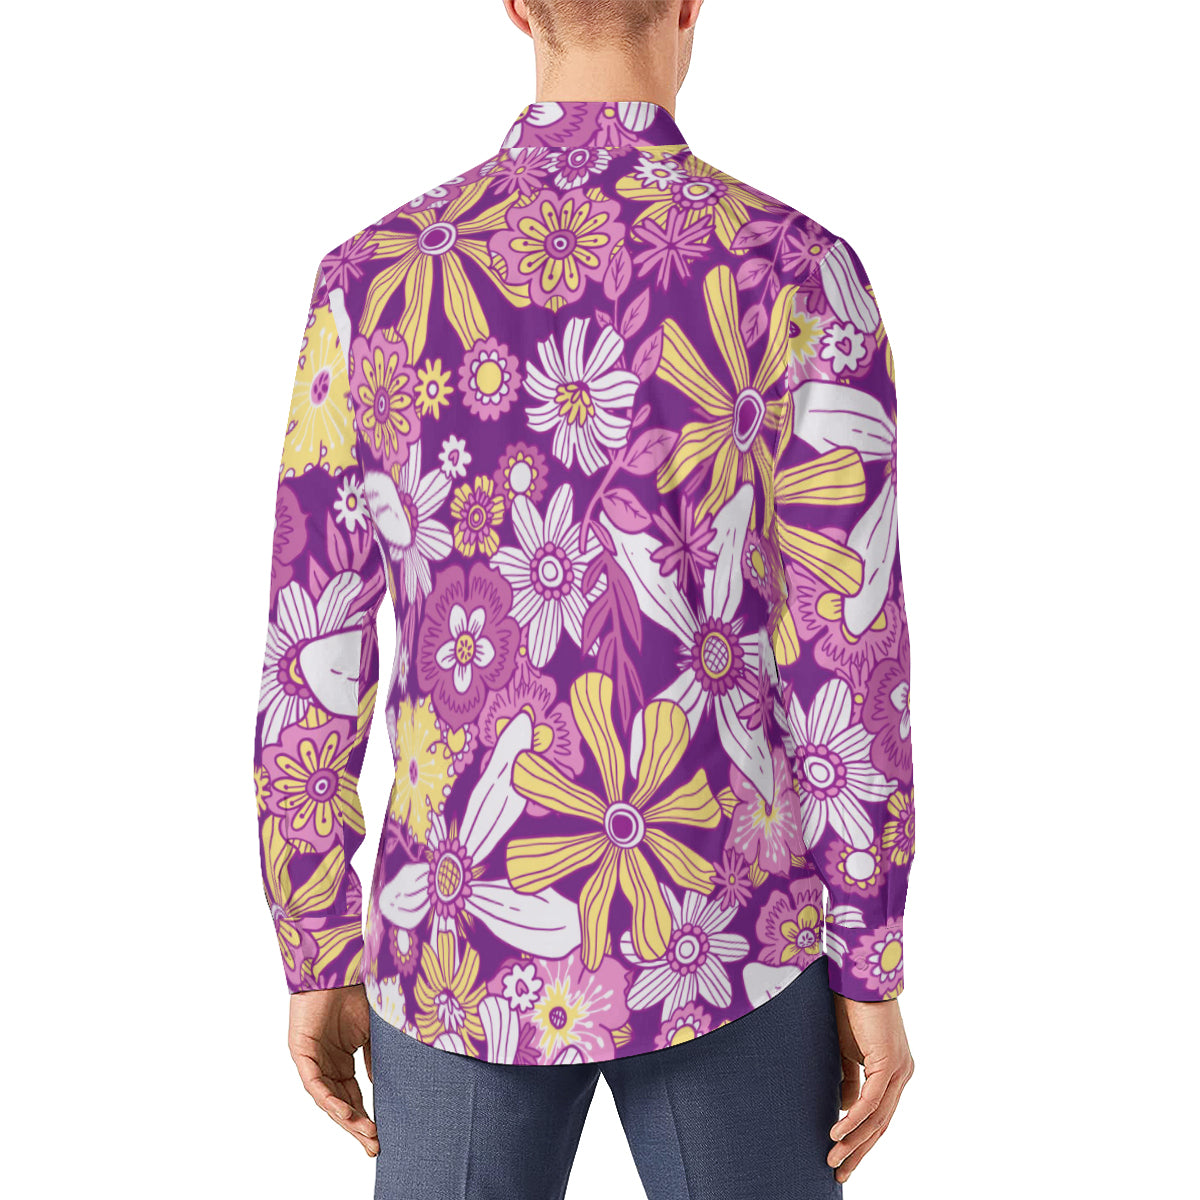 Vintage 70s style shirt, Retro Shirt Men, Purple Floral Shirt Men, Hippie Shirt Men, Purple Shirt Men, 70s Shirt Men, 70s inspired shirt